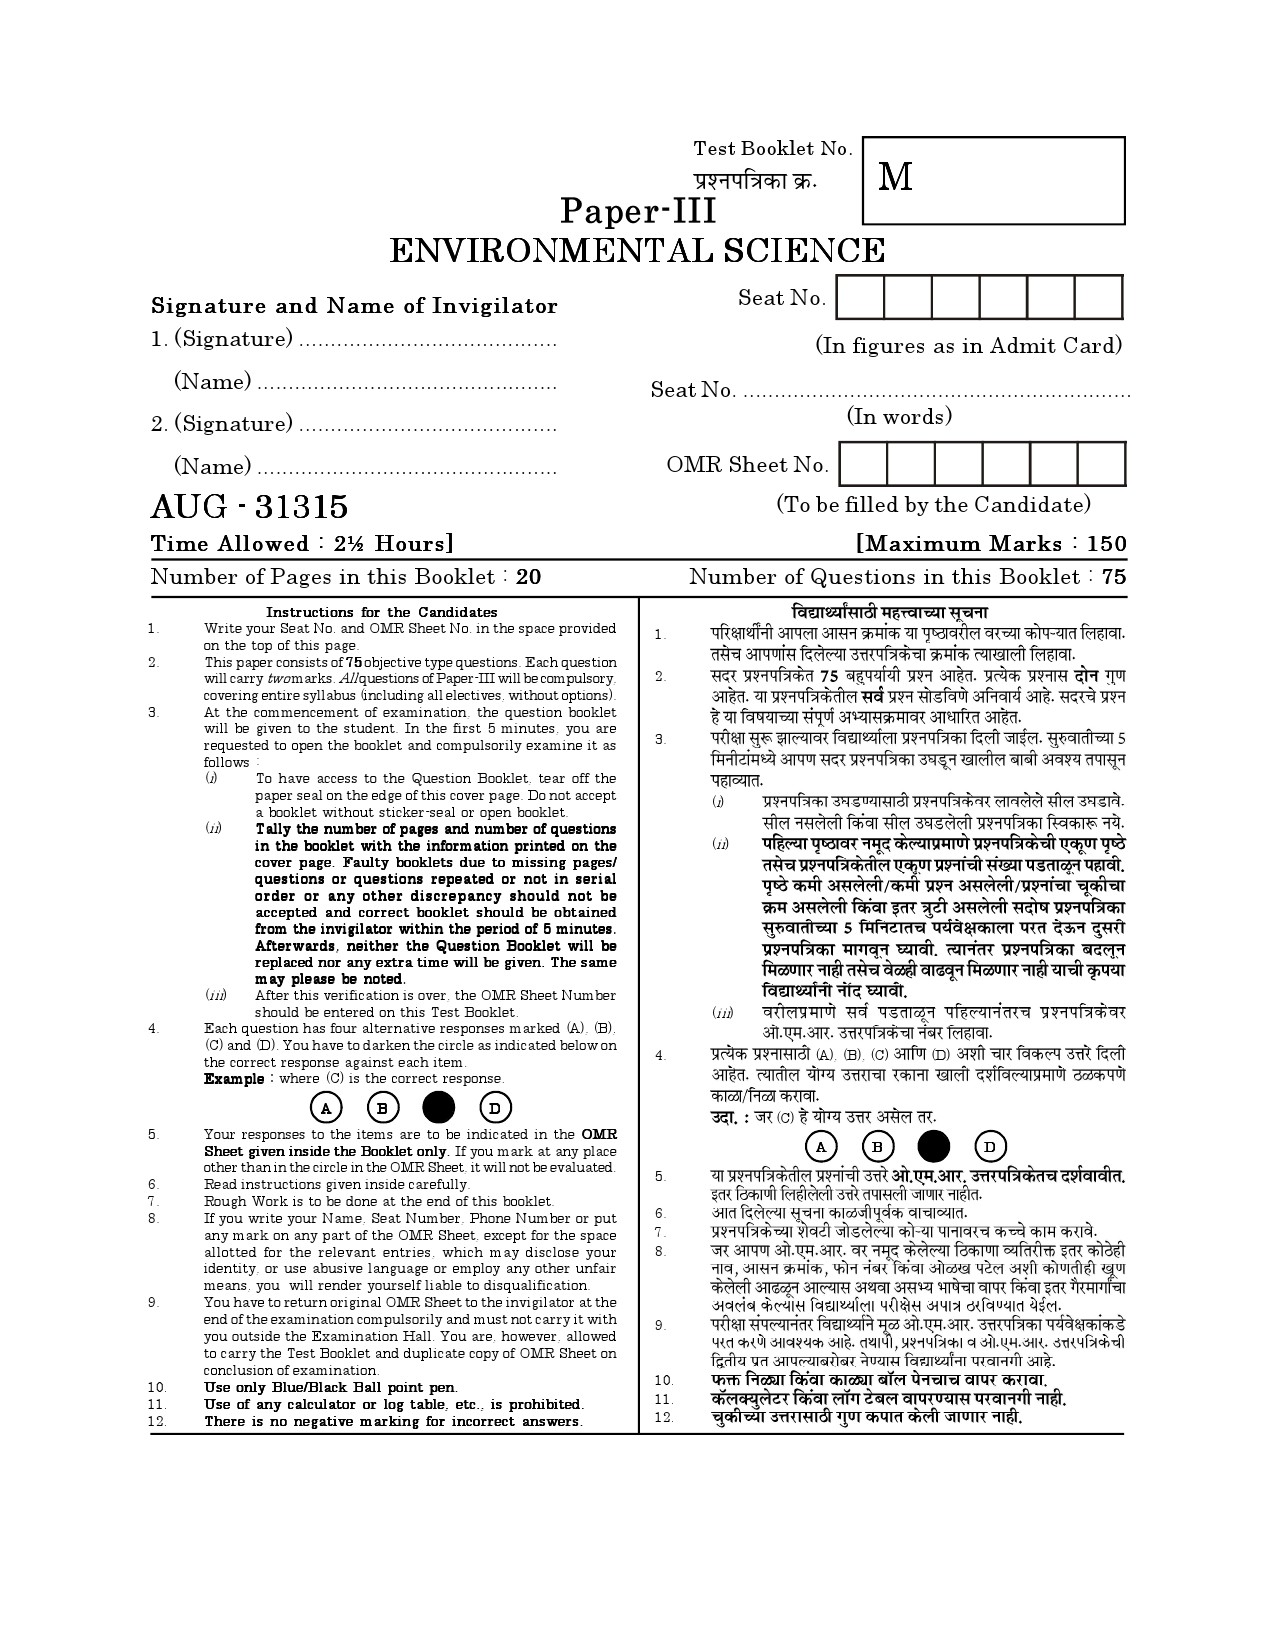 Maharashtra SET Environmental Sciences Question Paper III August 2015 1